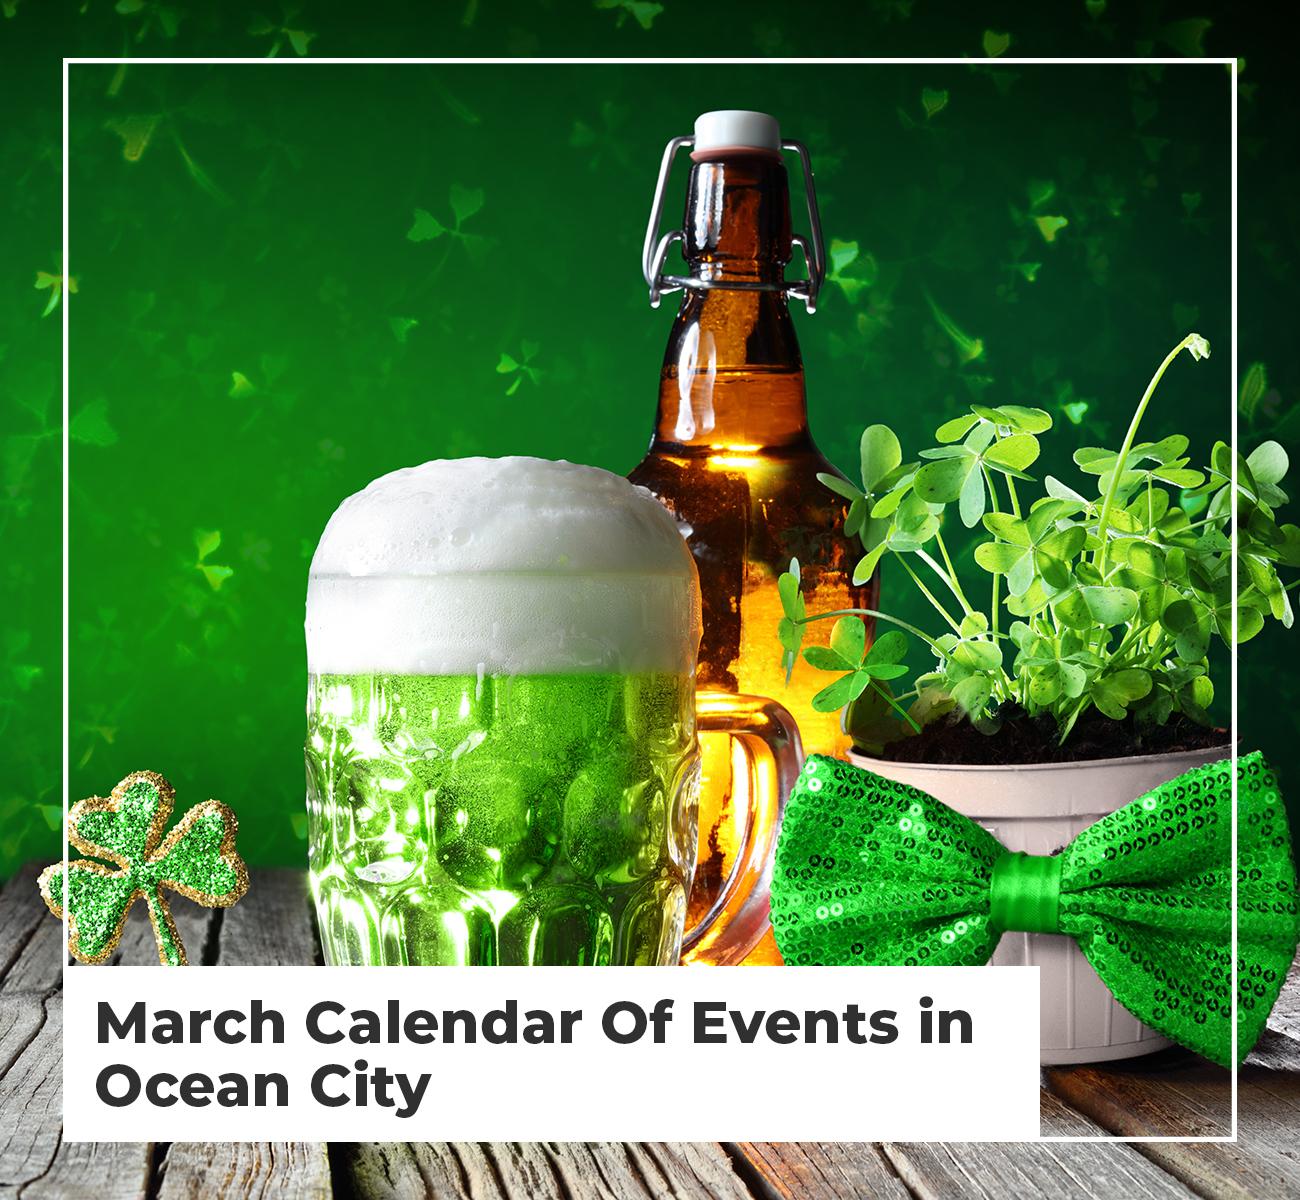 March Calendar of Events in Ocean City